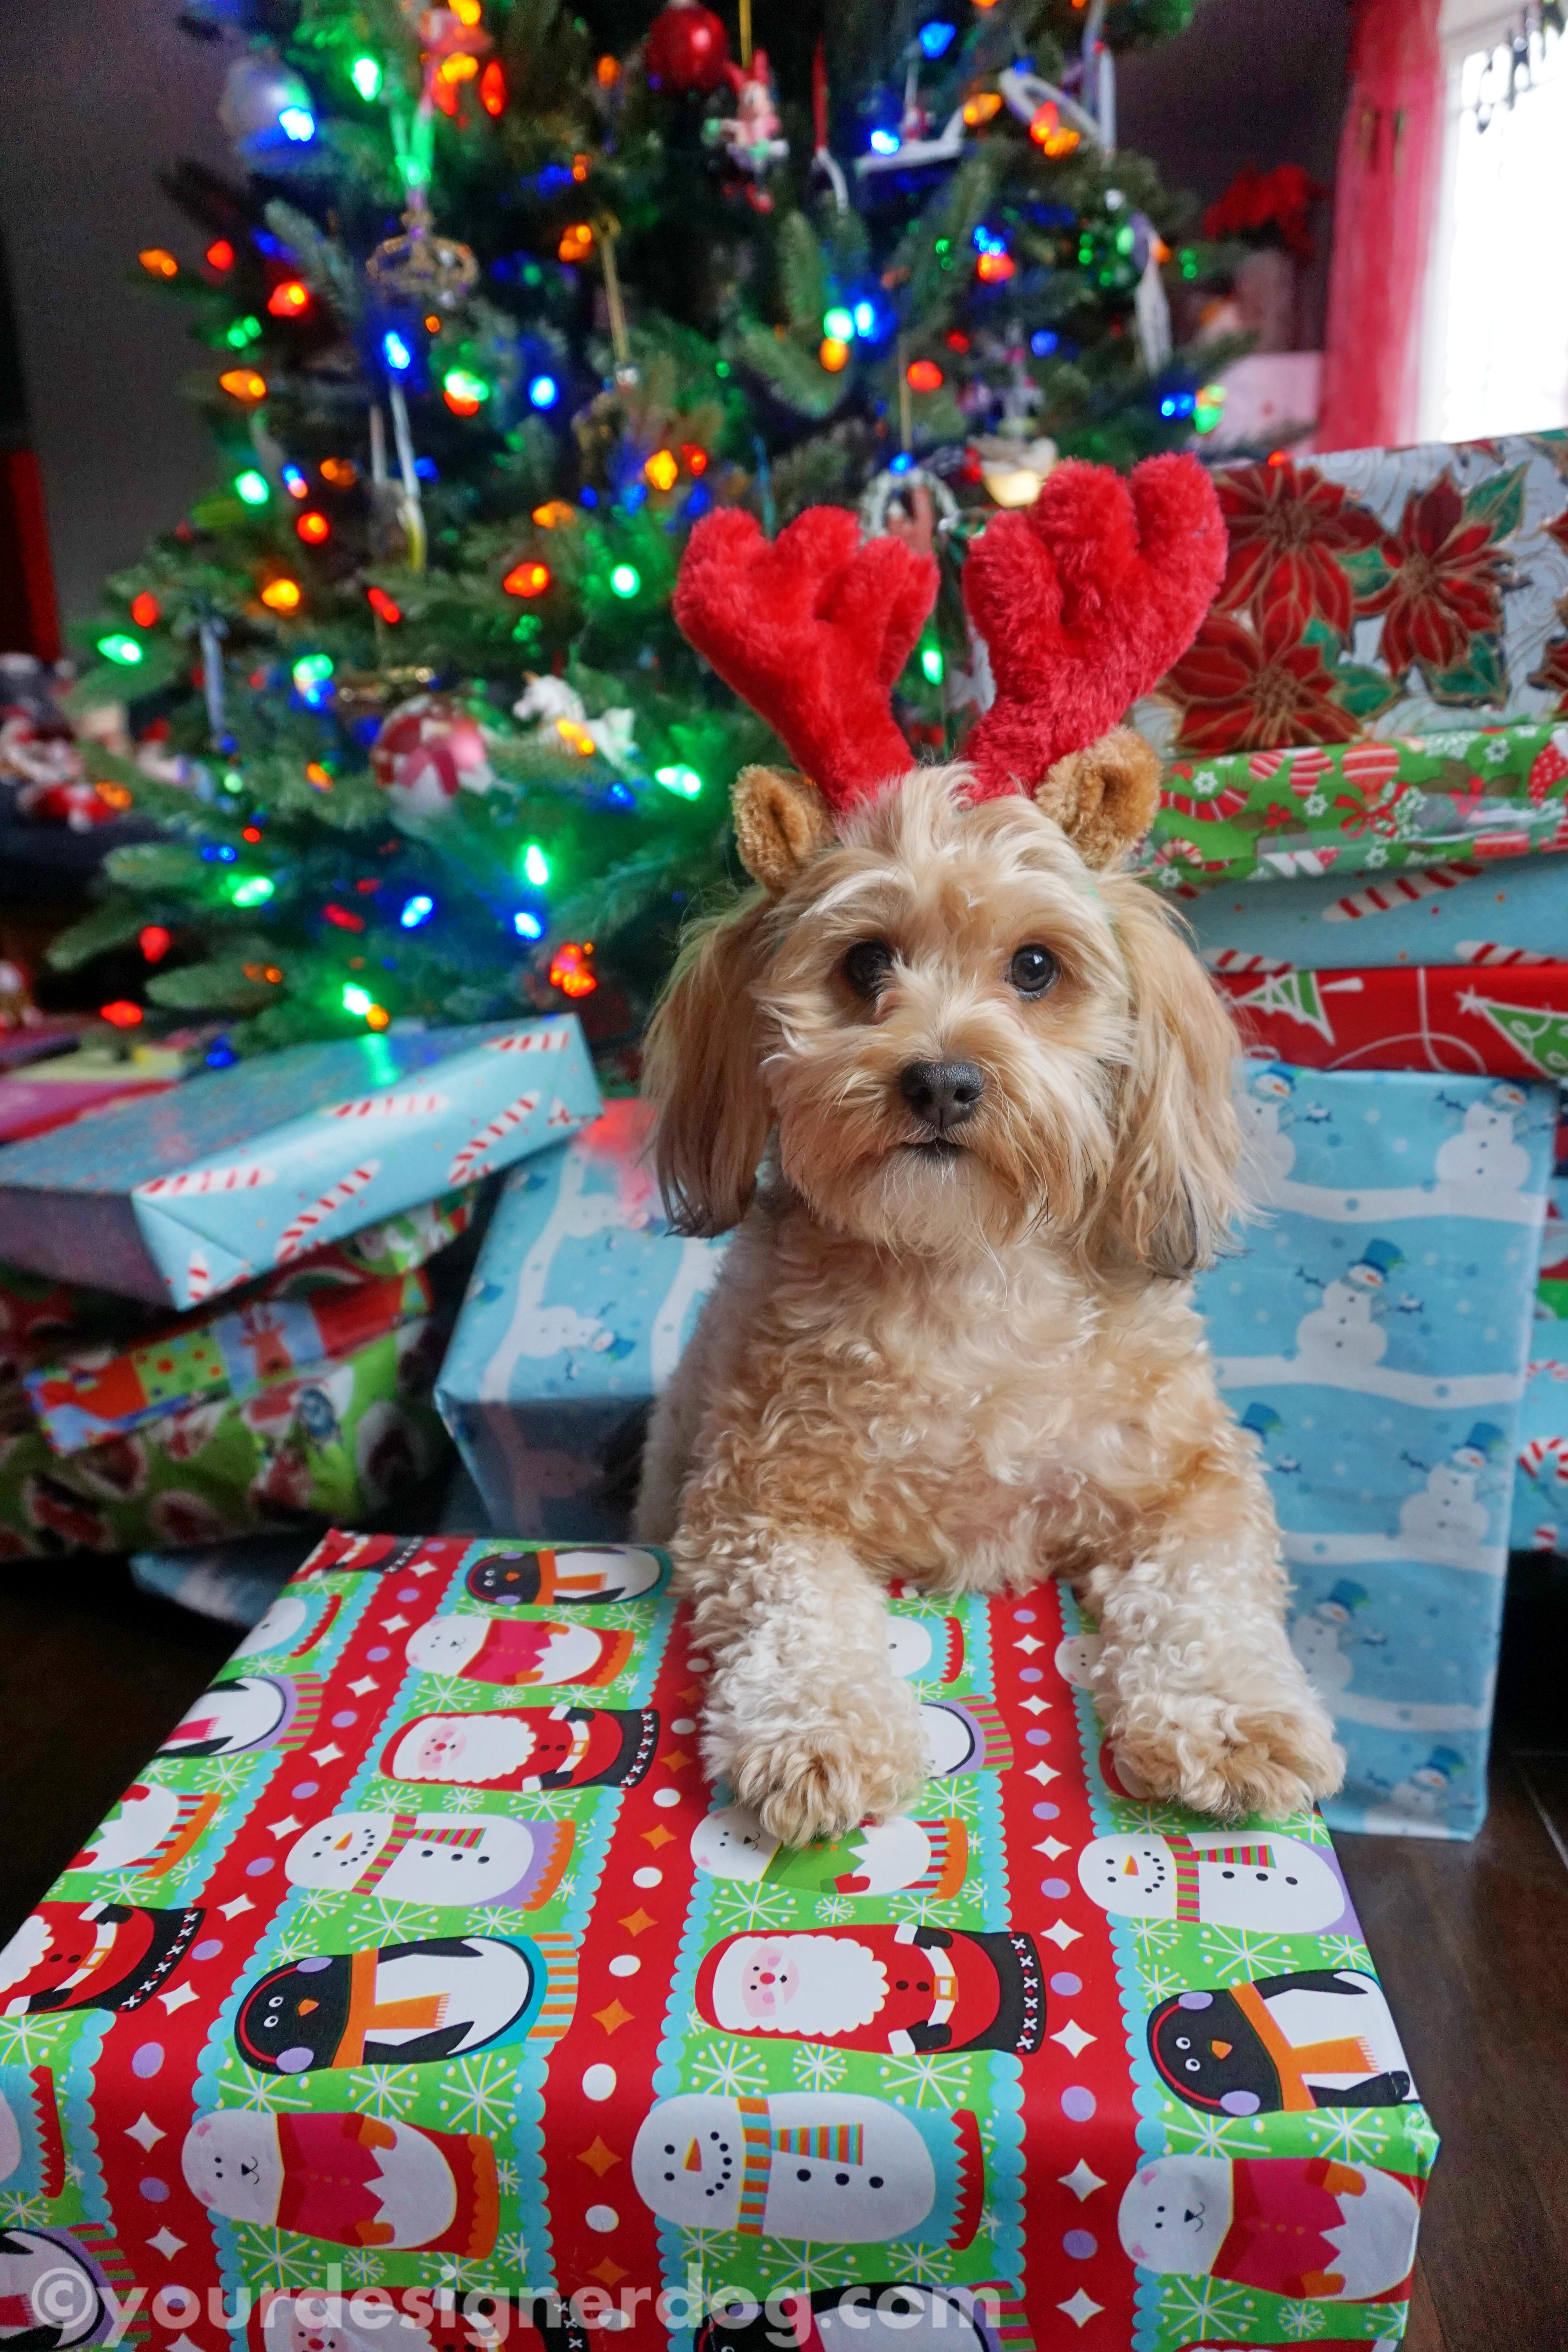 dogs, designer dogs, yorkipoo, yorkie poo, christmas tree, presents, reindeer